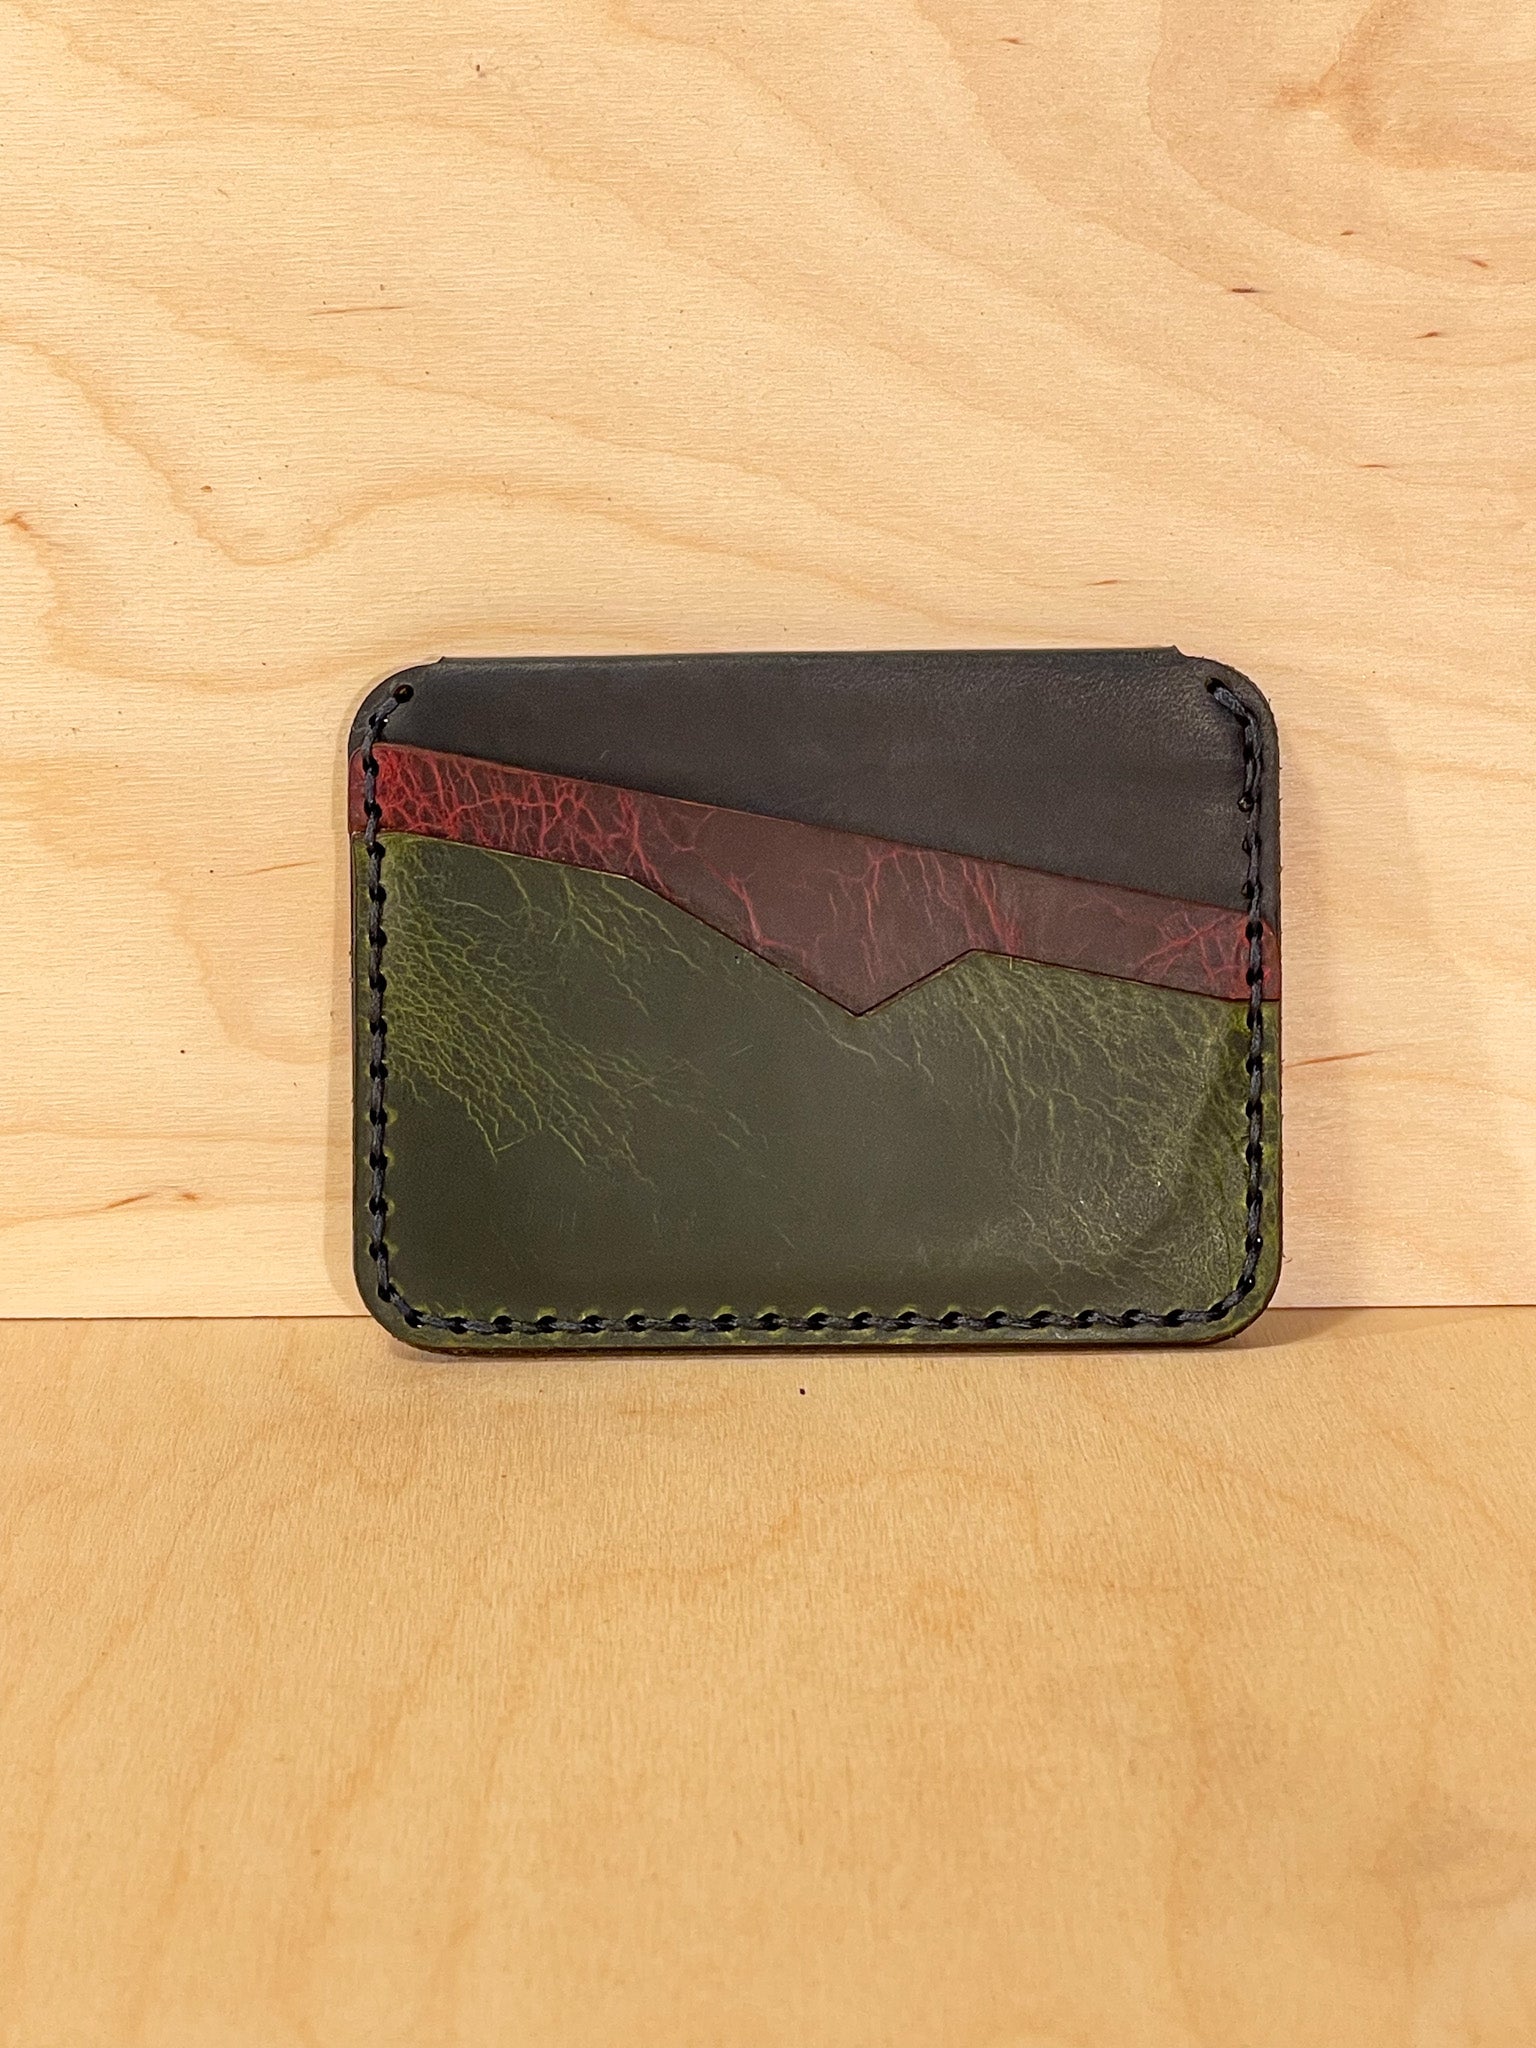 Wrangler Minimalist Leather Wallet OOAK 2